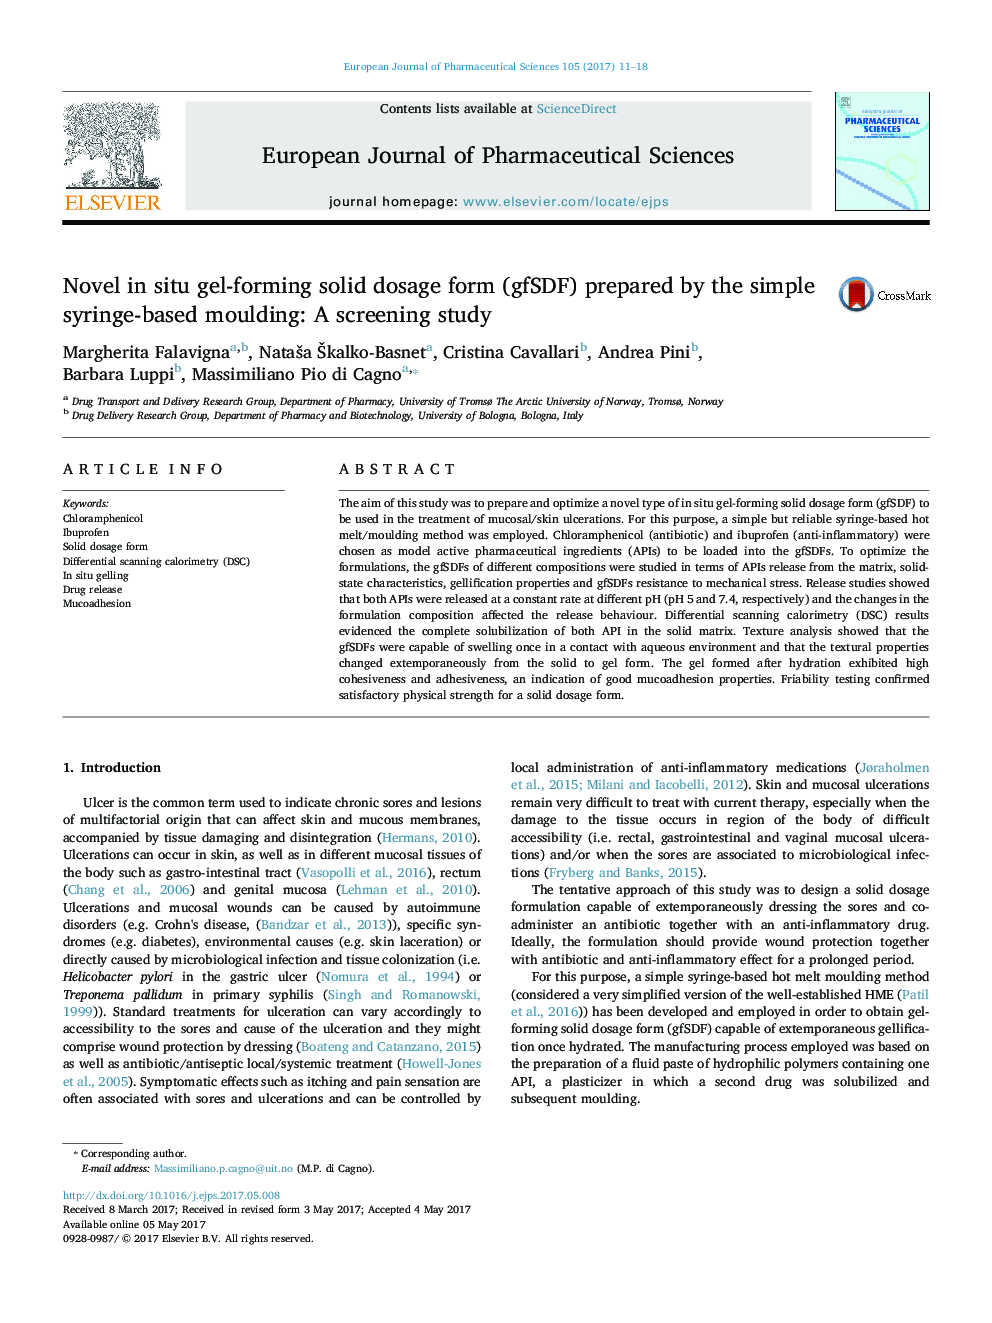 Novel in situ gel-forming solid dosage form (gfSDF) prepared by the simple syringe-based moulding: A screening study